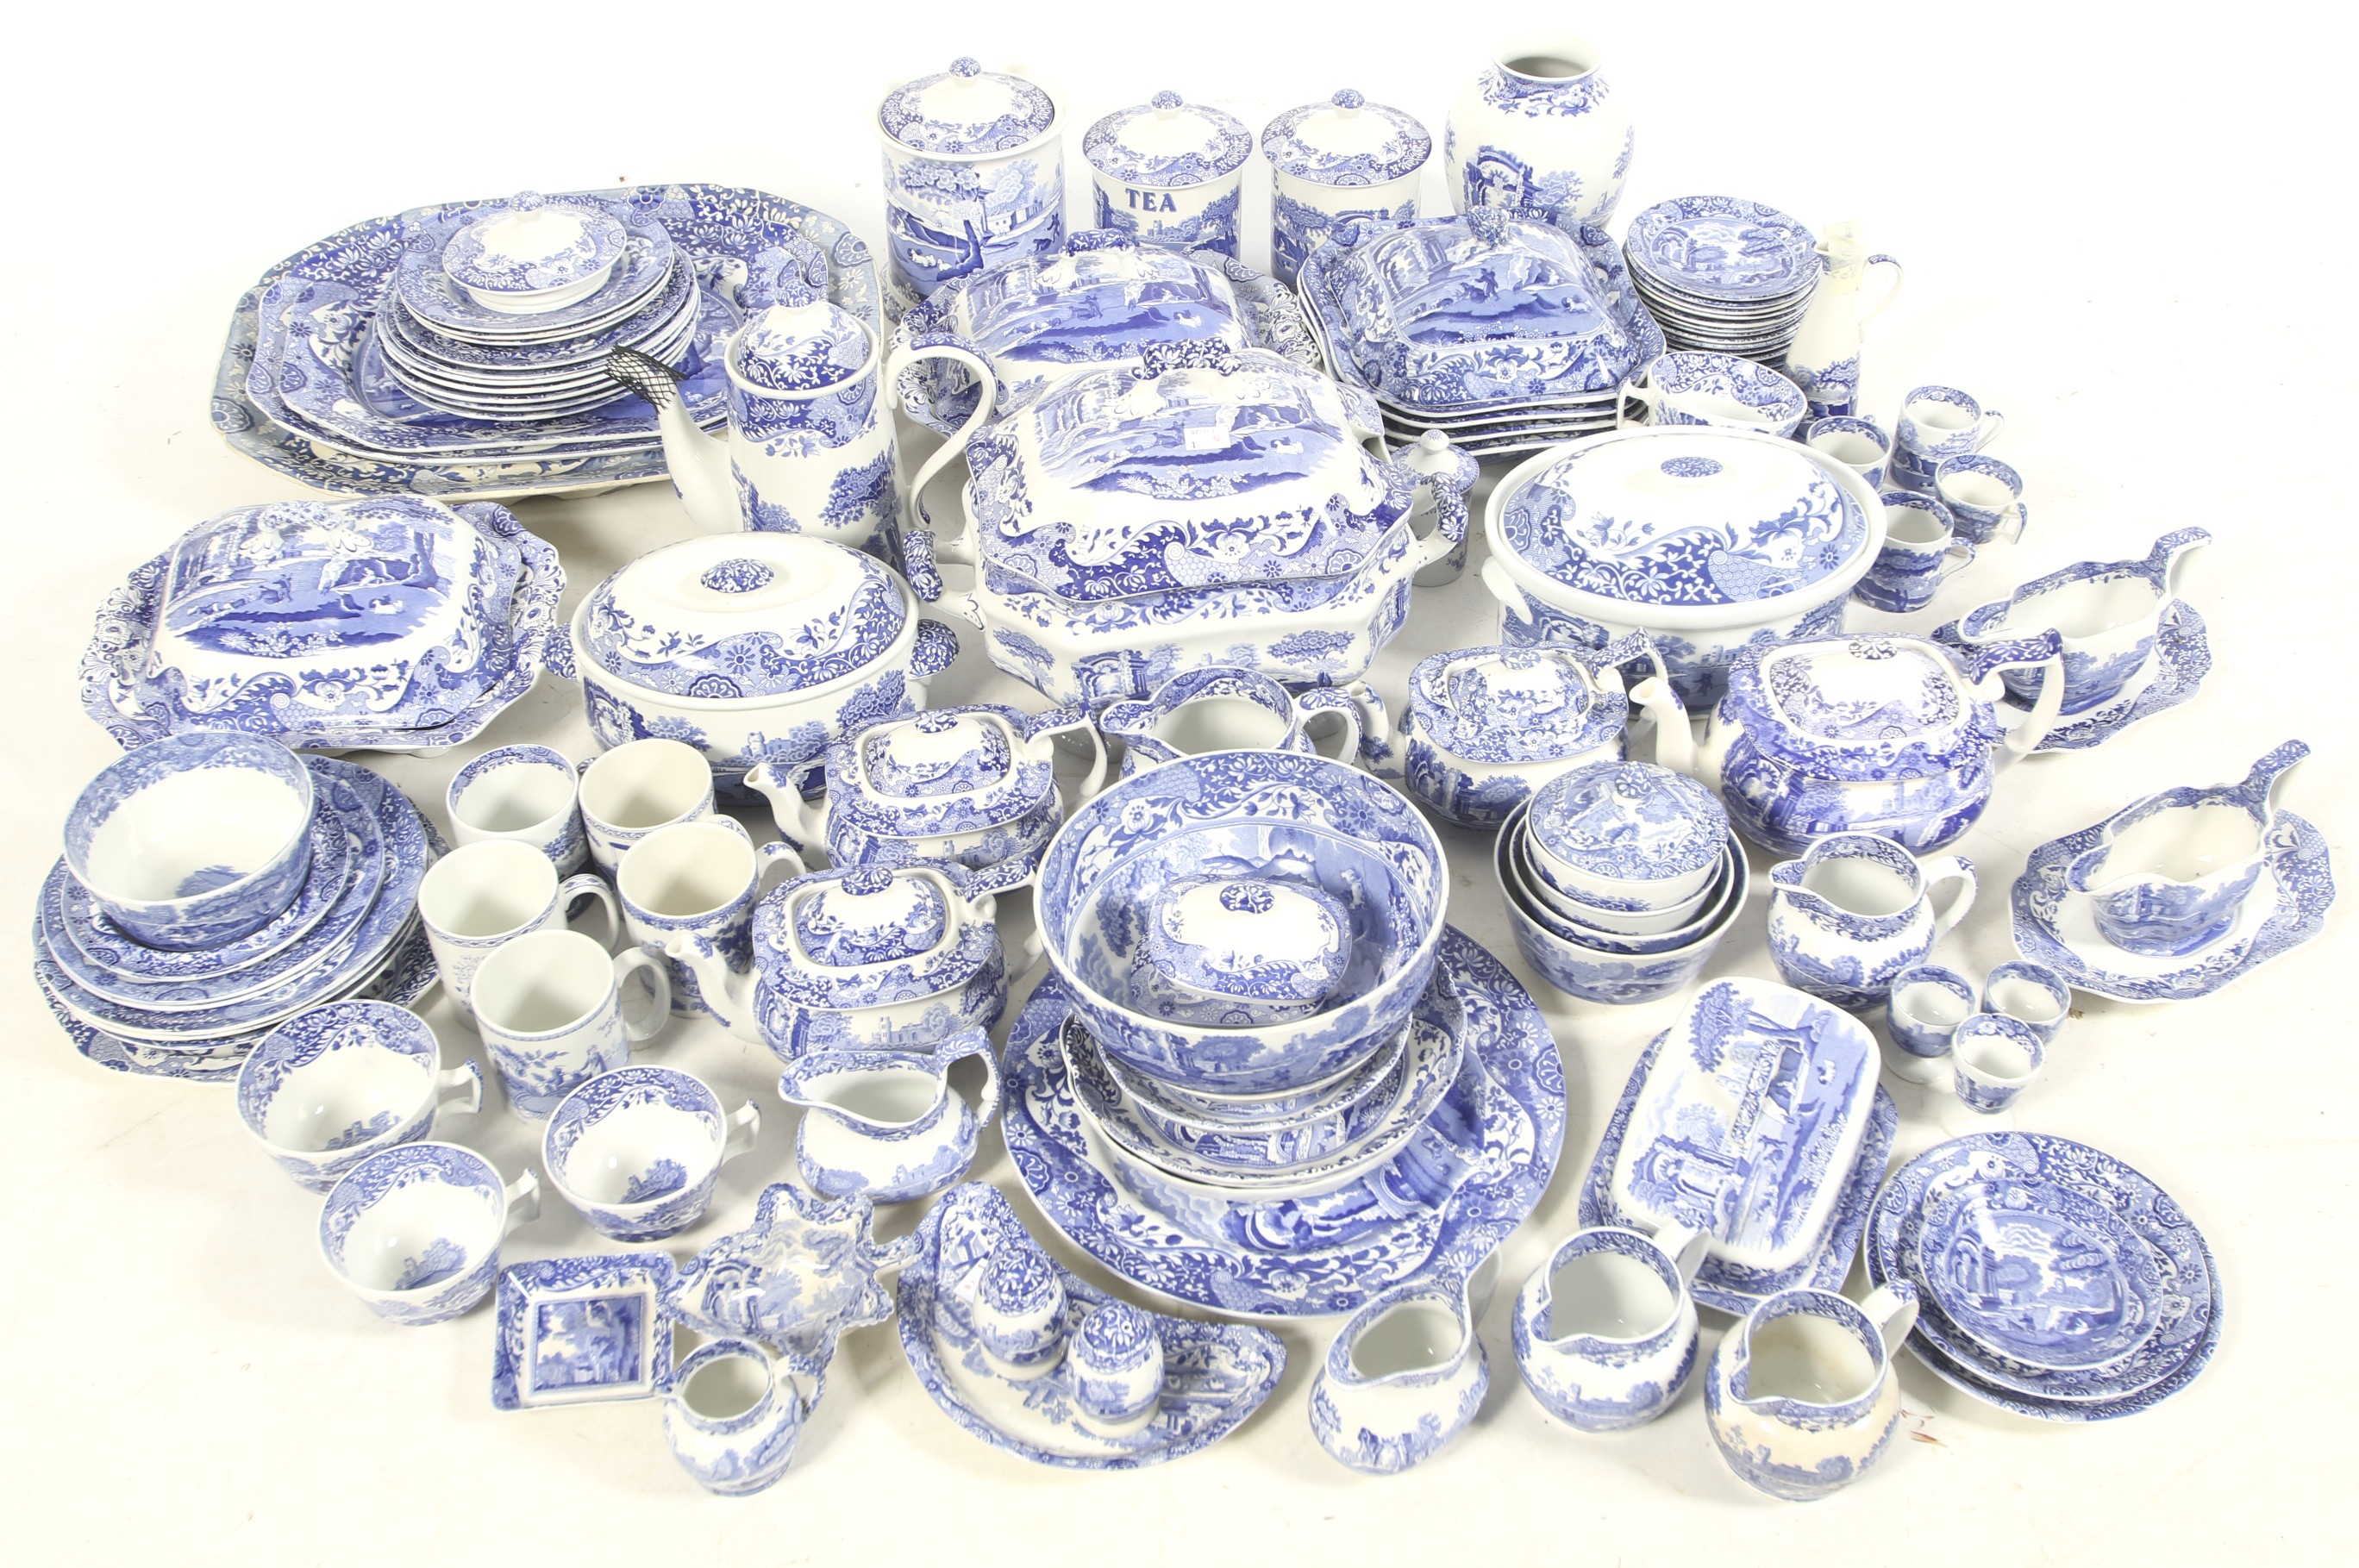 19th century and later Spode and Copeland blue Italian ceramics.